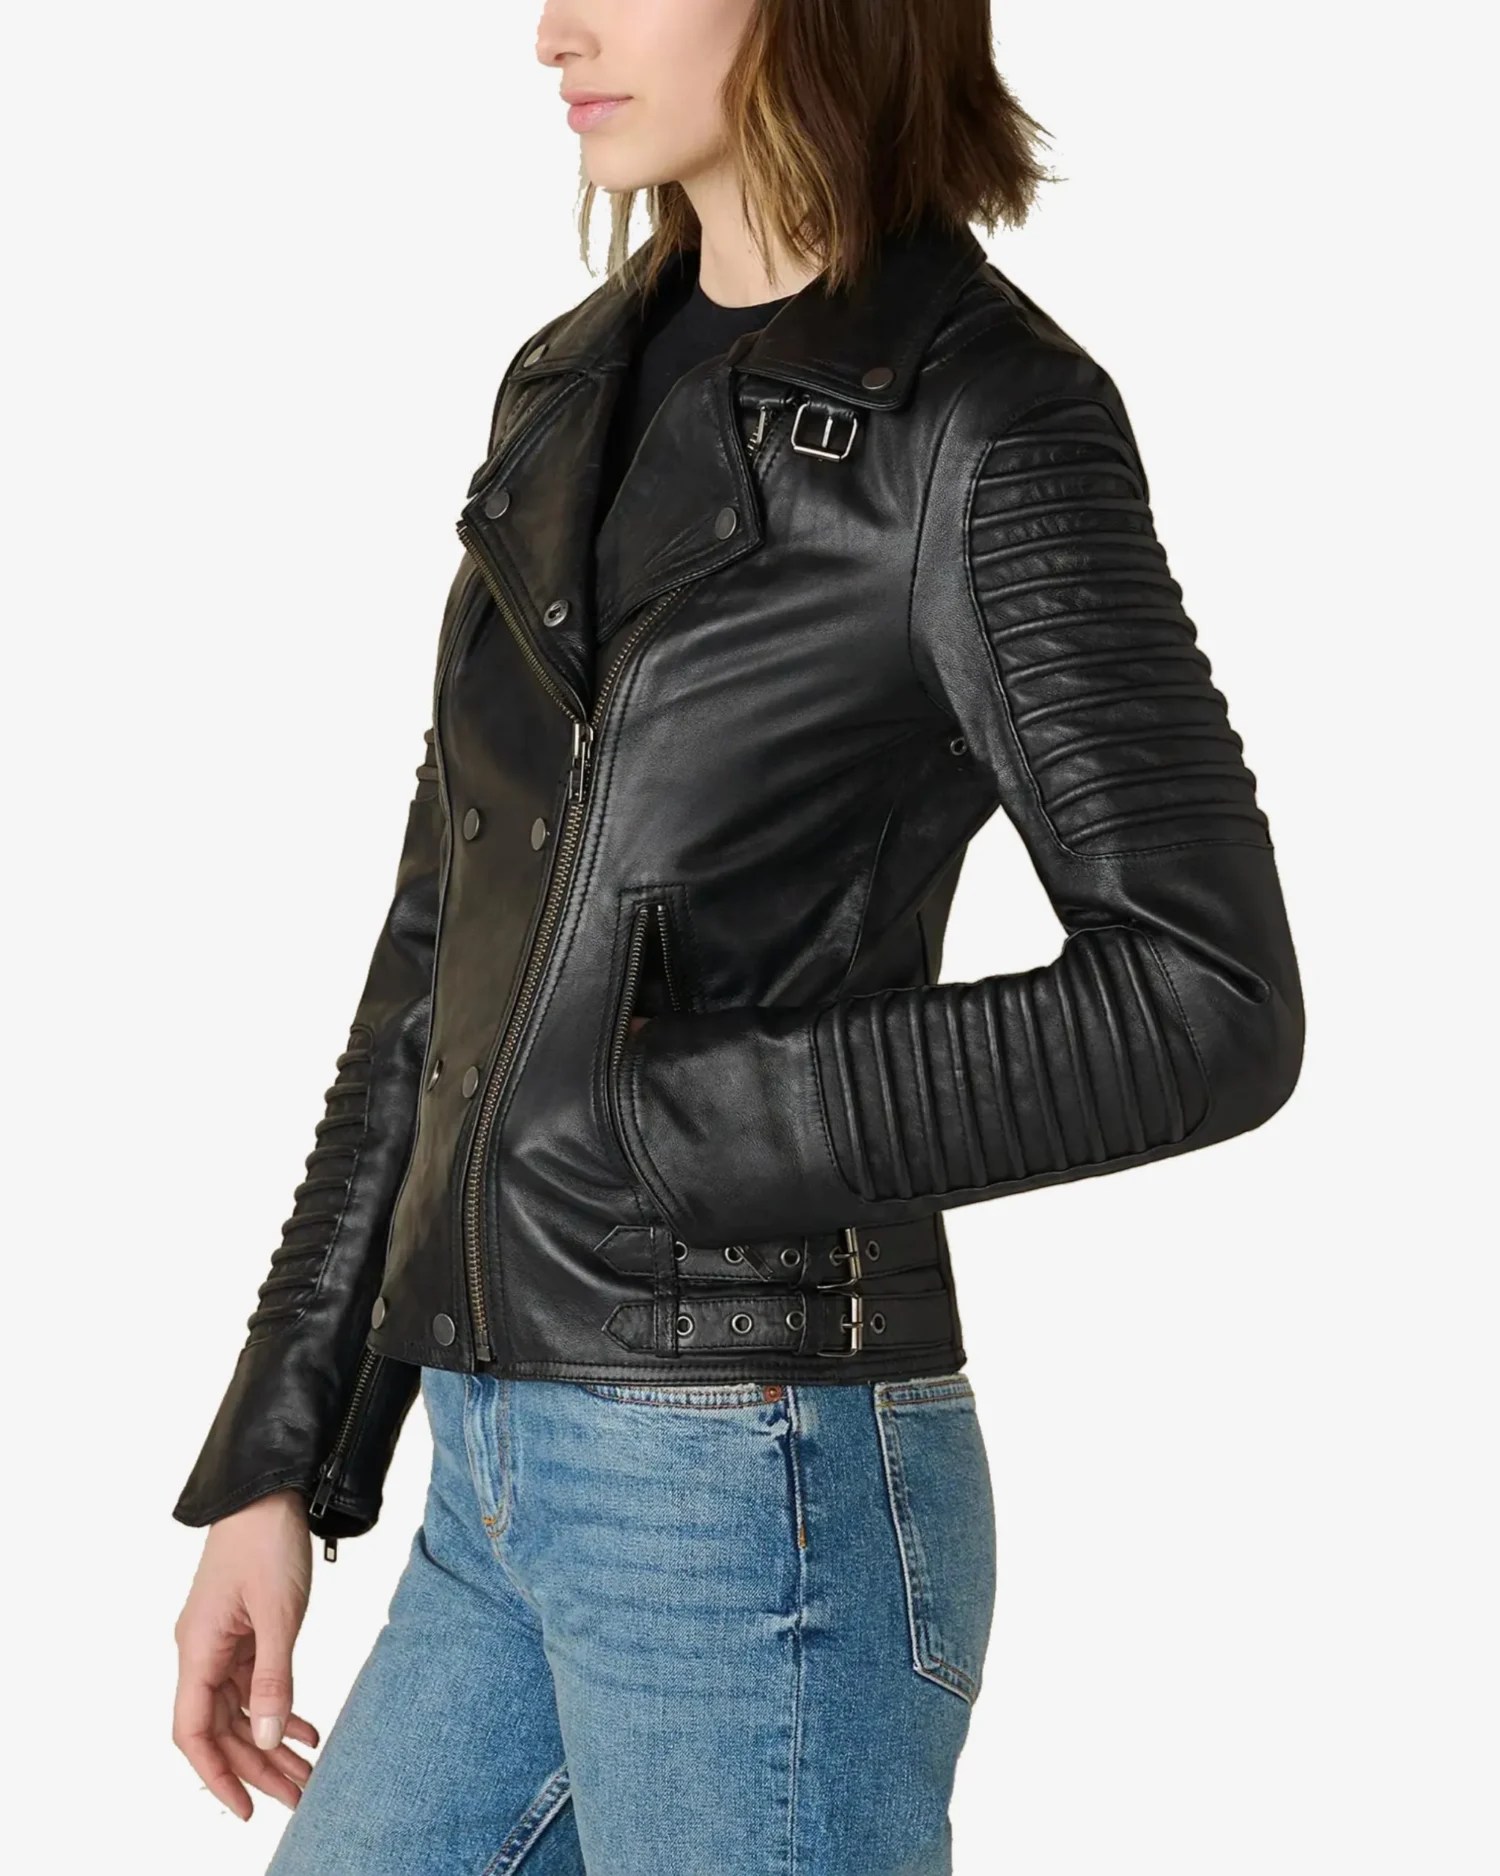 brandy-black-quilted-biker-leather-jacket-100-genuine-lambskin (1)